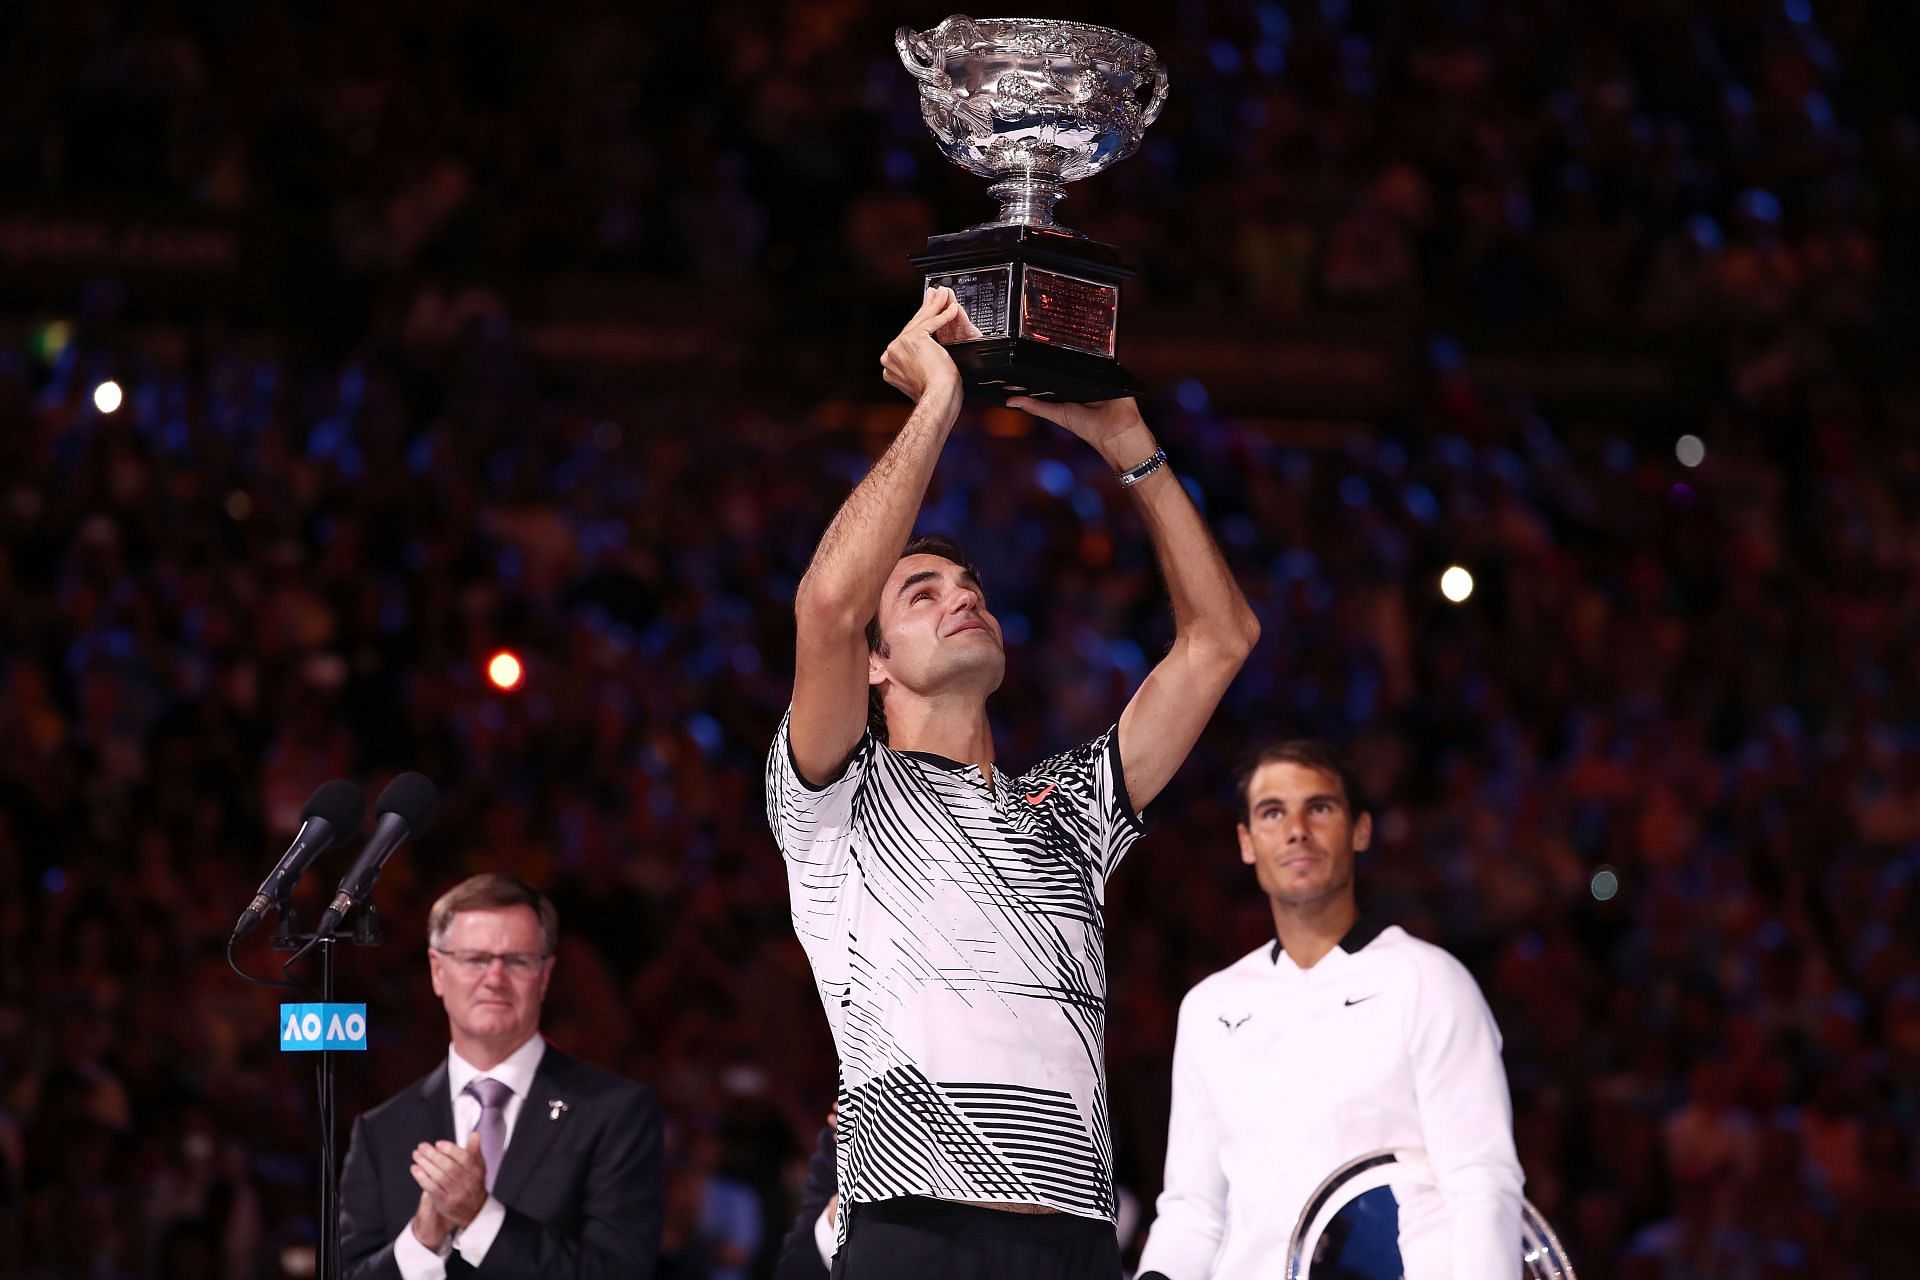 Roger Federer won his sixth Australian Open crown in 2017